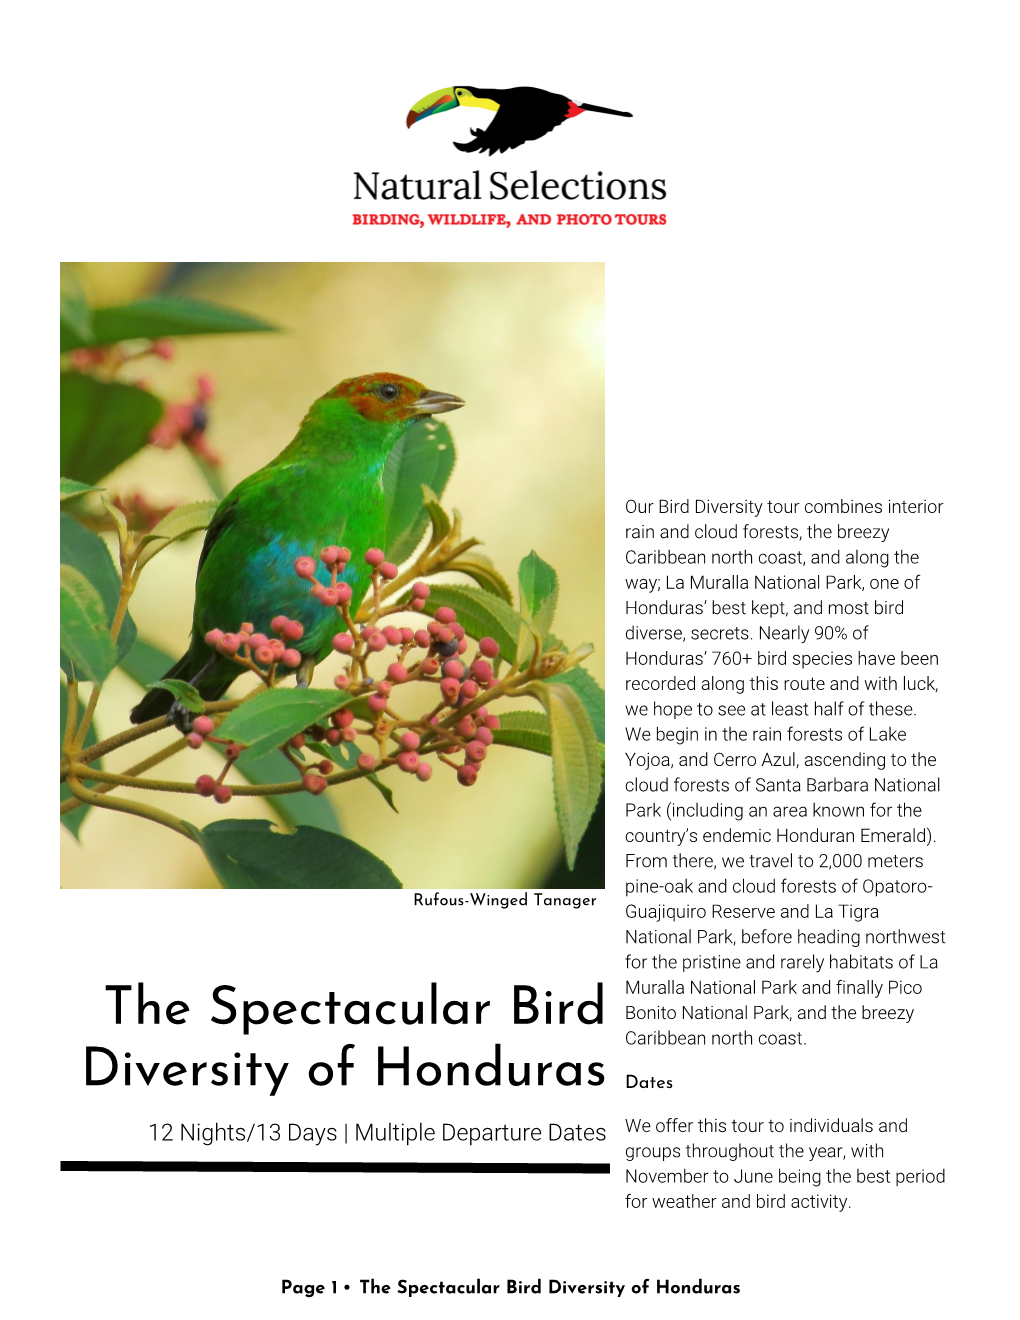 The Spectacular Bird Diversity of Honduras